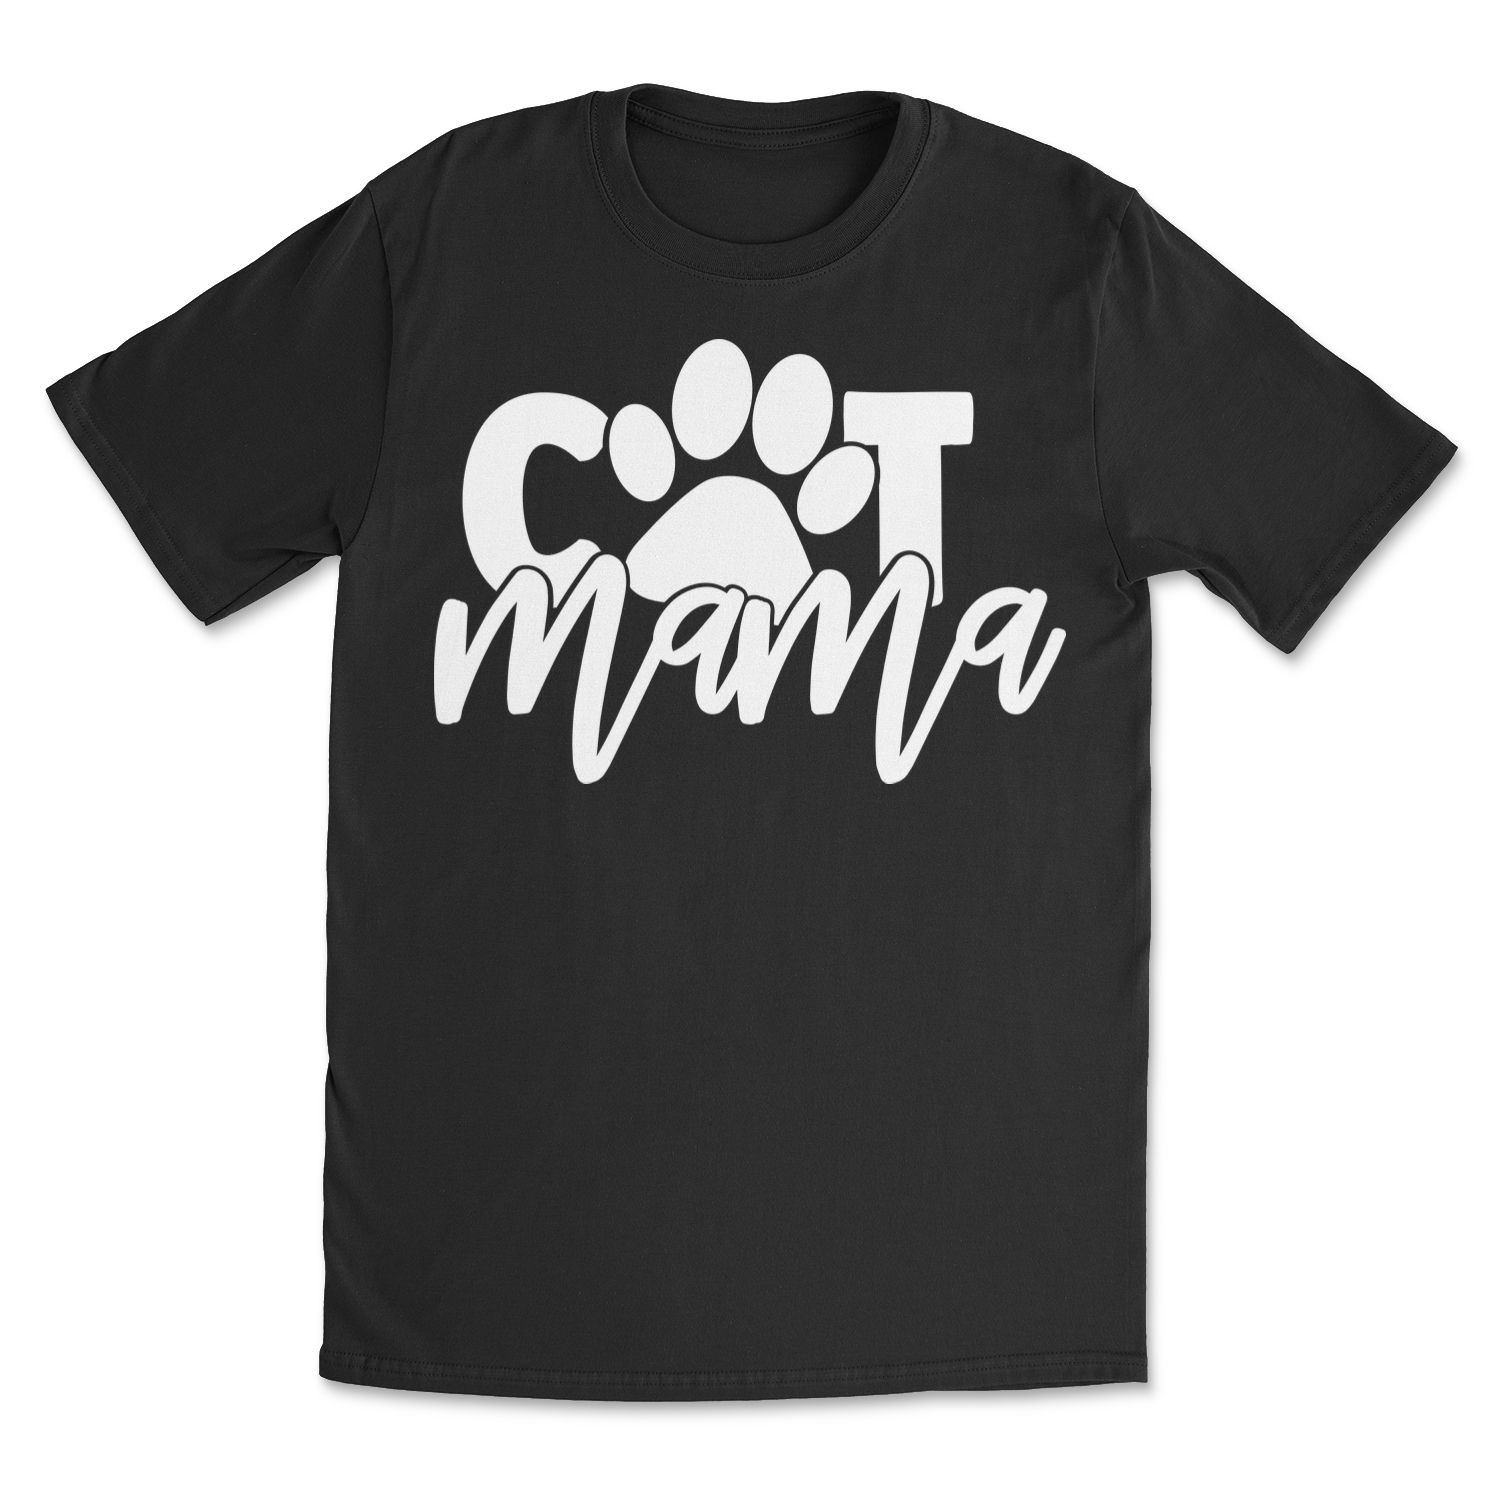 Cat mama shirt black